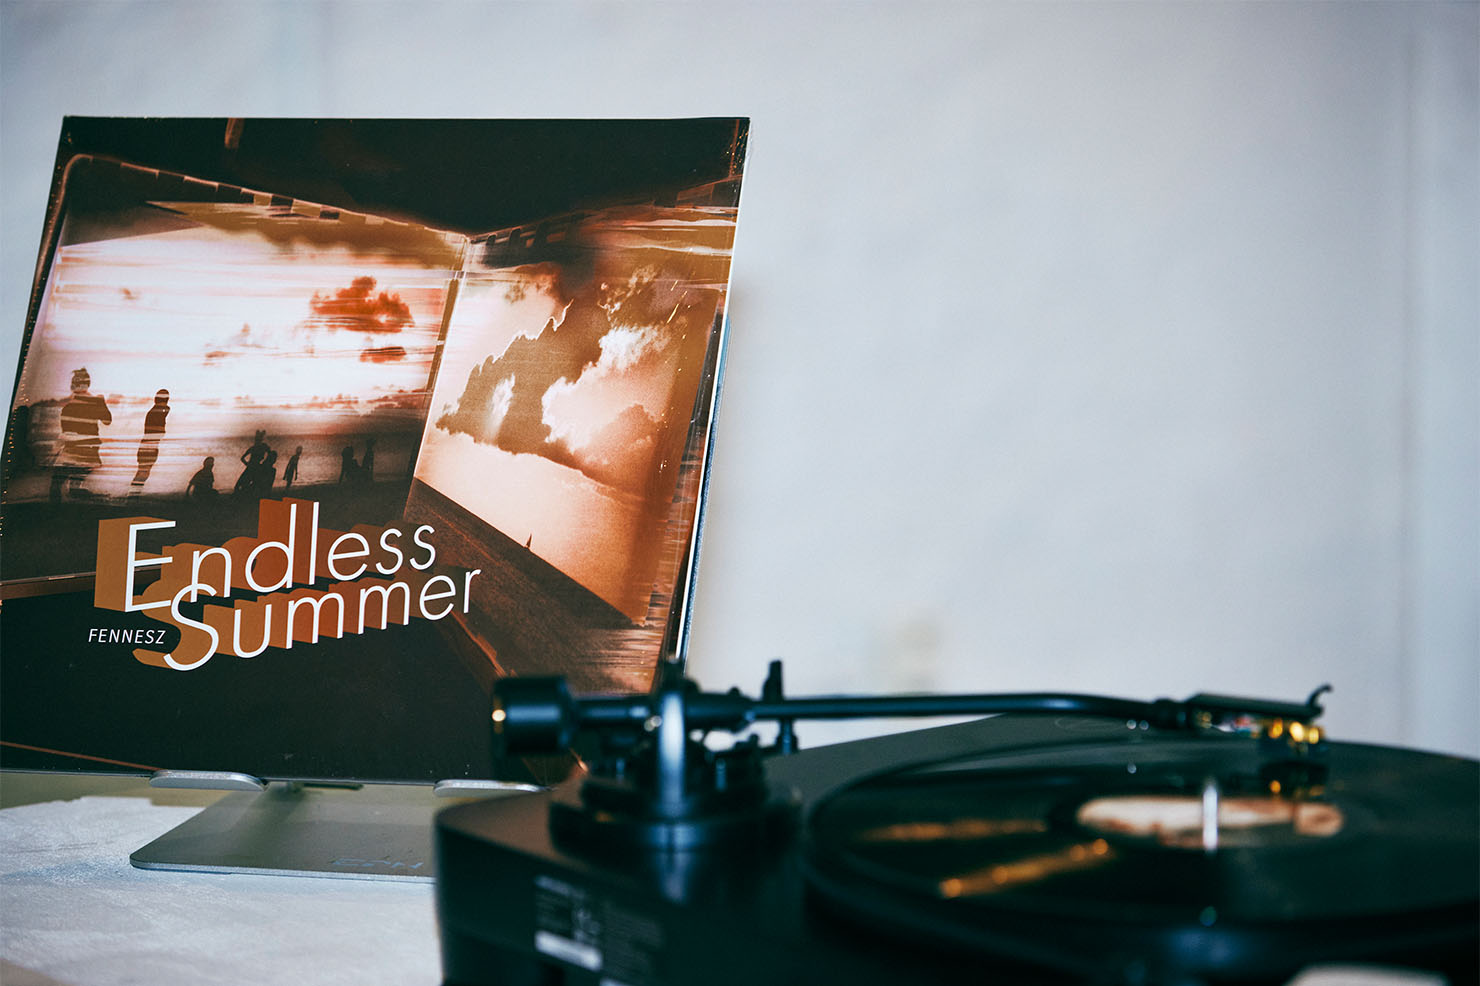 〜「VM760SLC」 で視聴　Christian Fennesz 『Endless Summer』 収録曲 「Endless Summer」〜